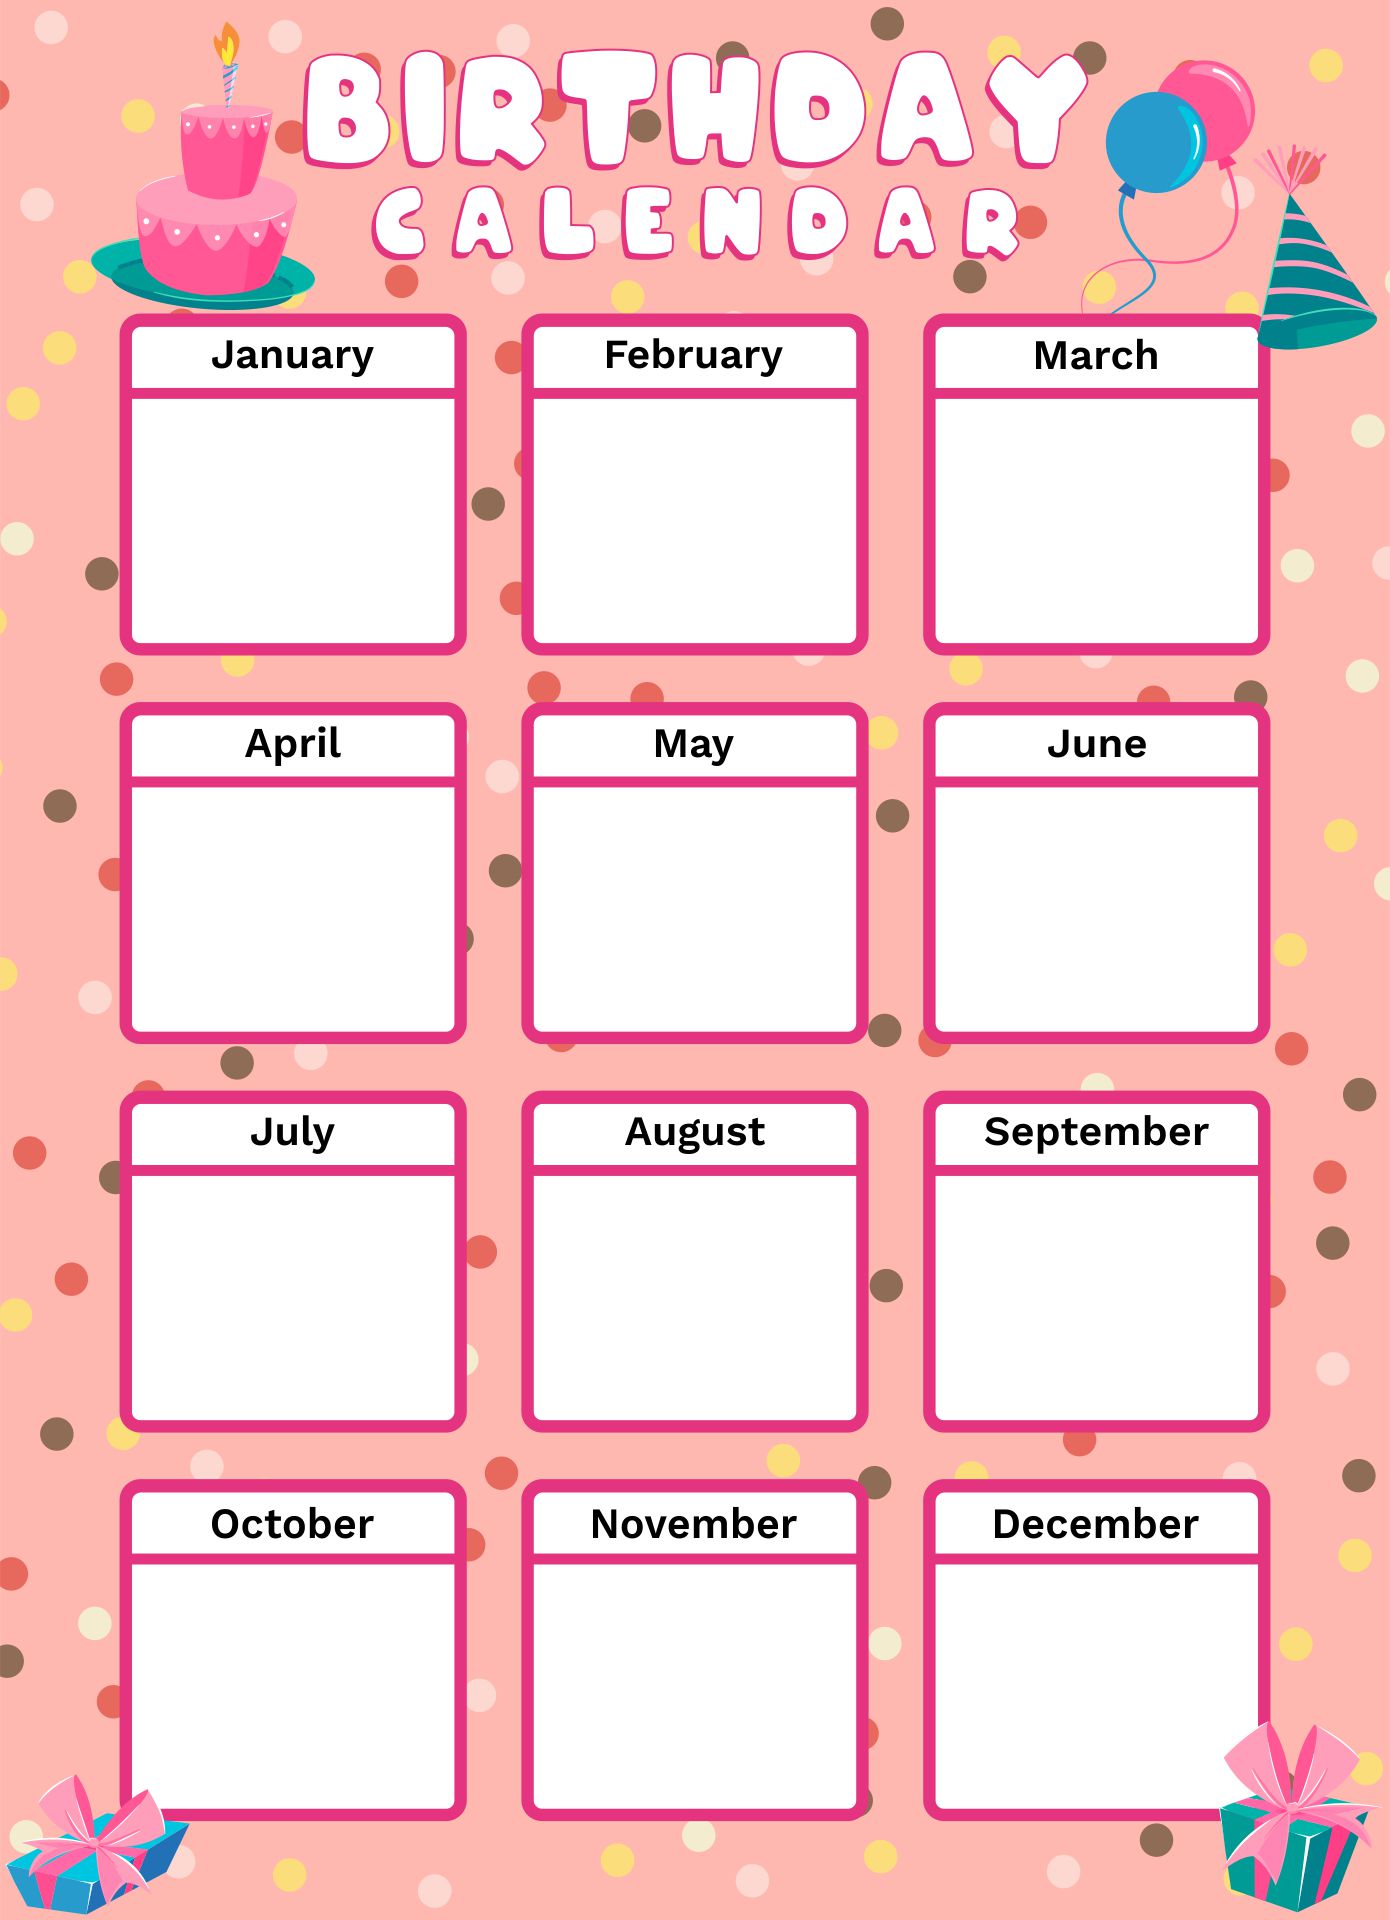 4 Best Images of Printable Birthday Calendar Cupcakes Happy Birthday